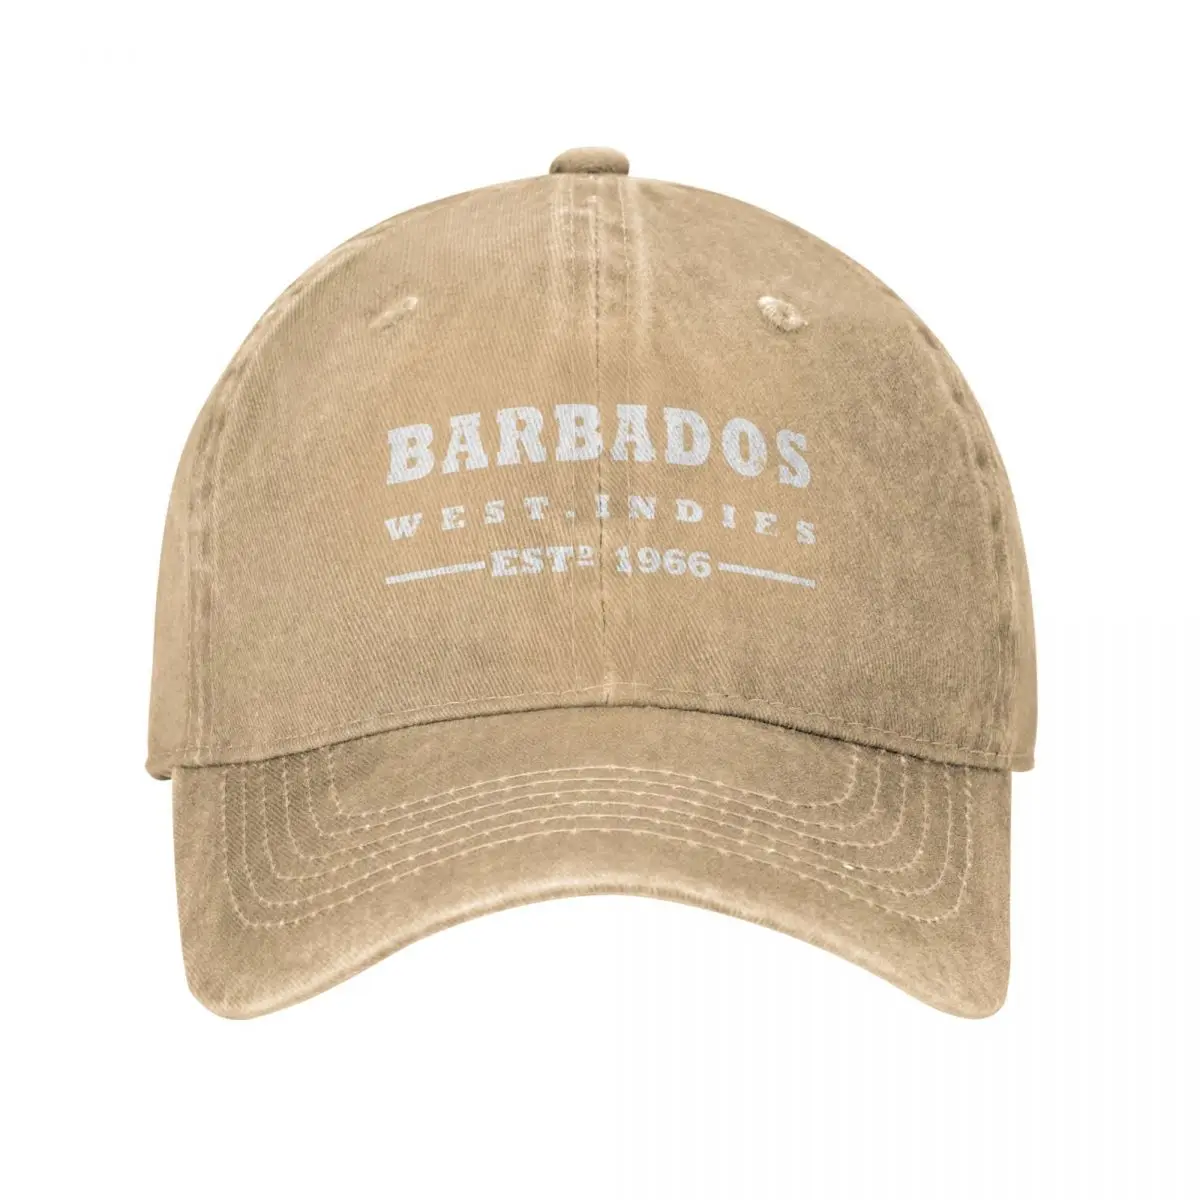 

Barbados - West Indies Estd 1966 Cap Cowboy Hat Beach outing gentleman baseball cap |-f-| baseball for man Women's